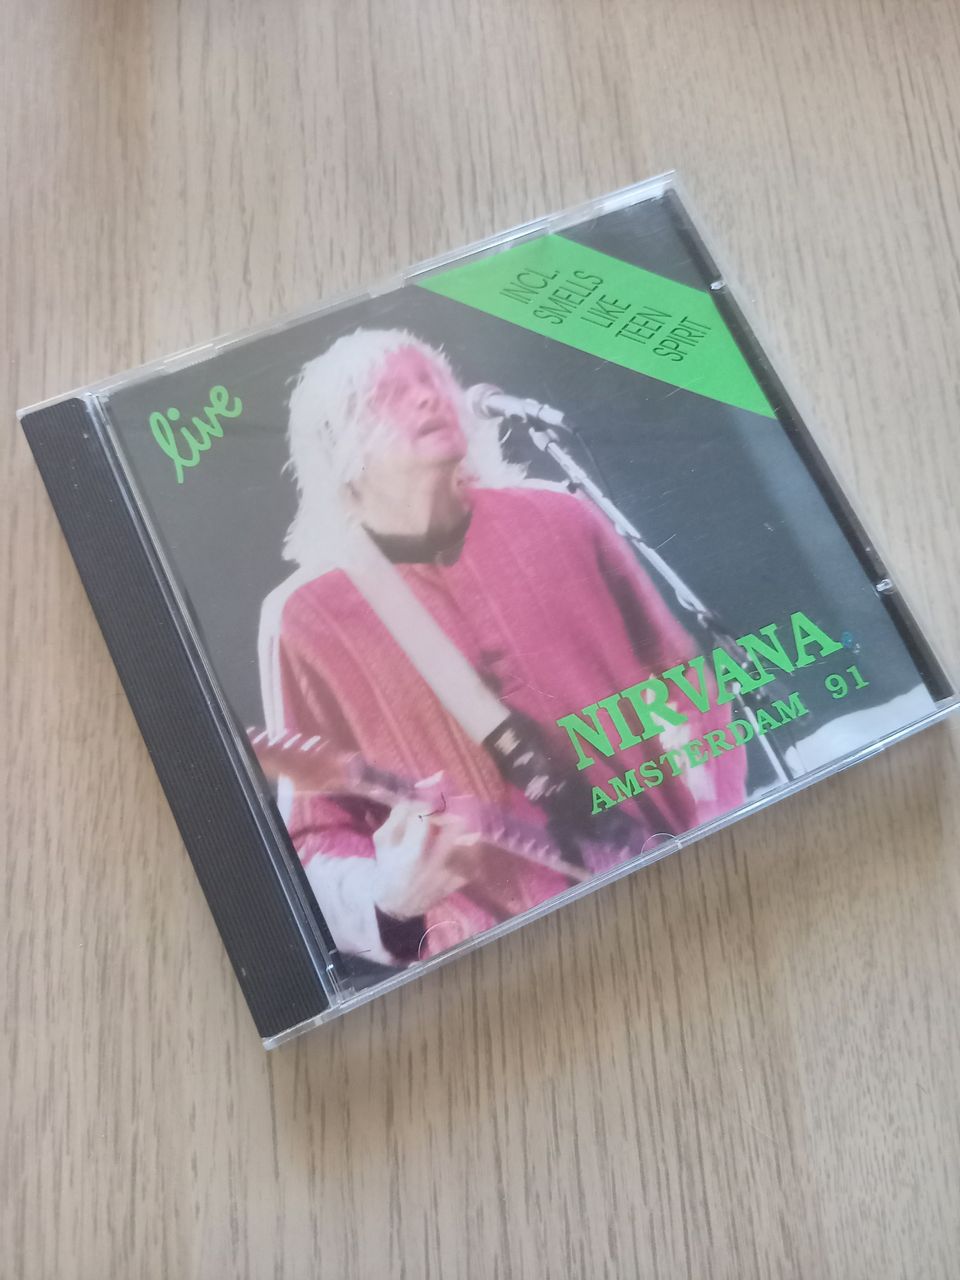 Nirvana - Amsterdam 91 CD